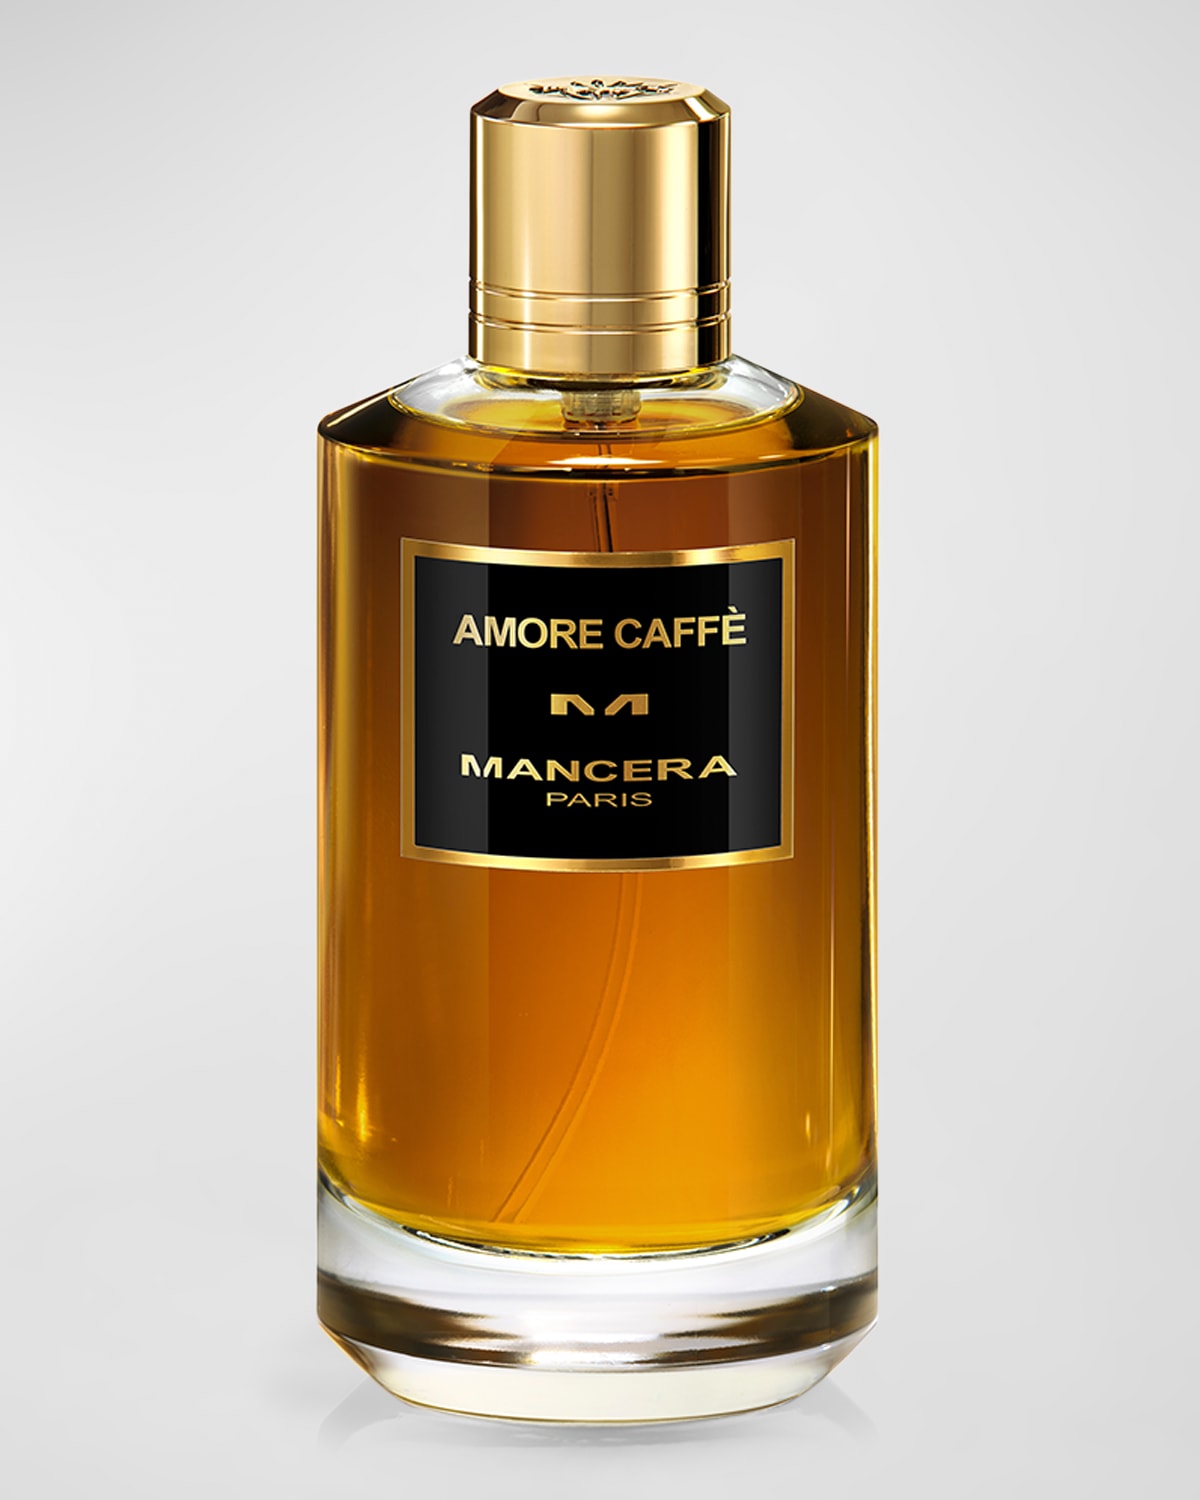 Amore Caffe Eau de Parfum, 4 oz.